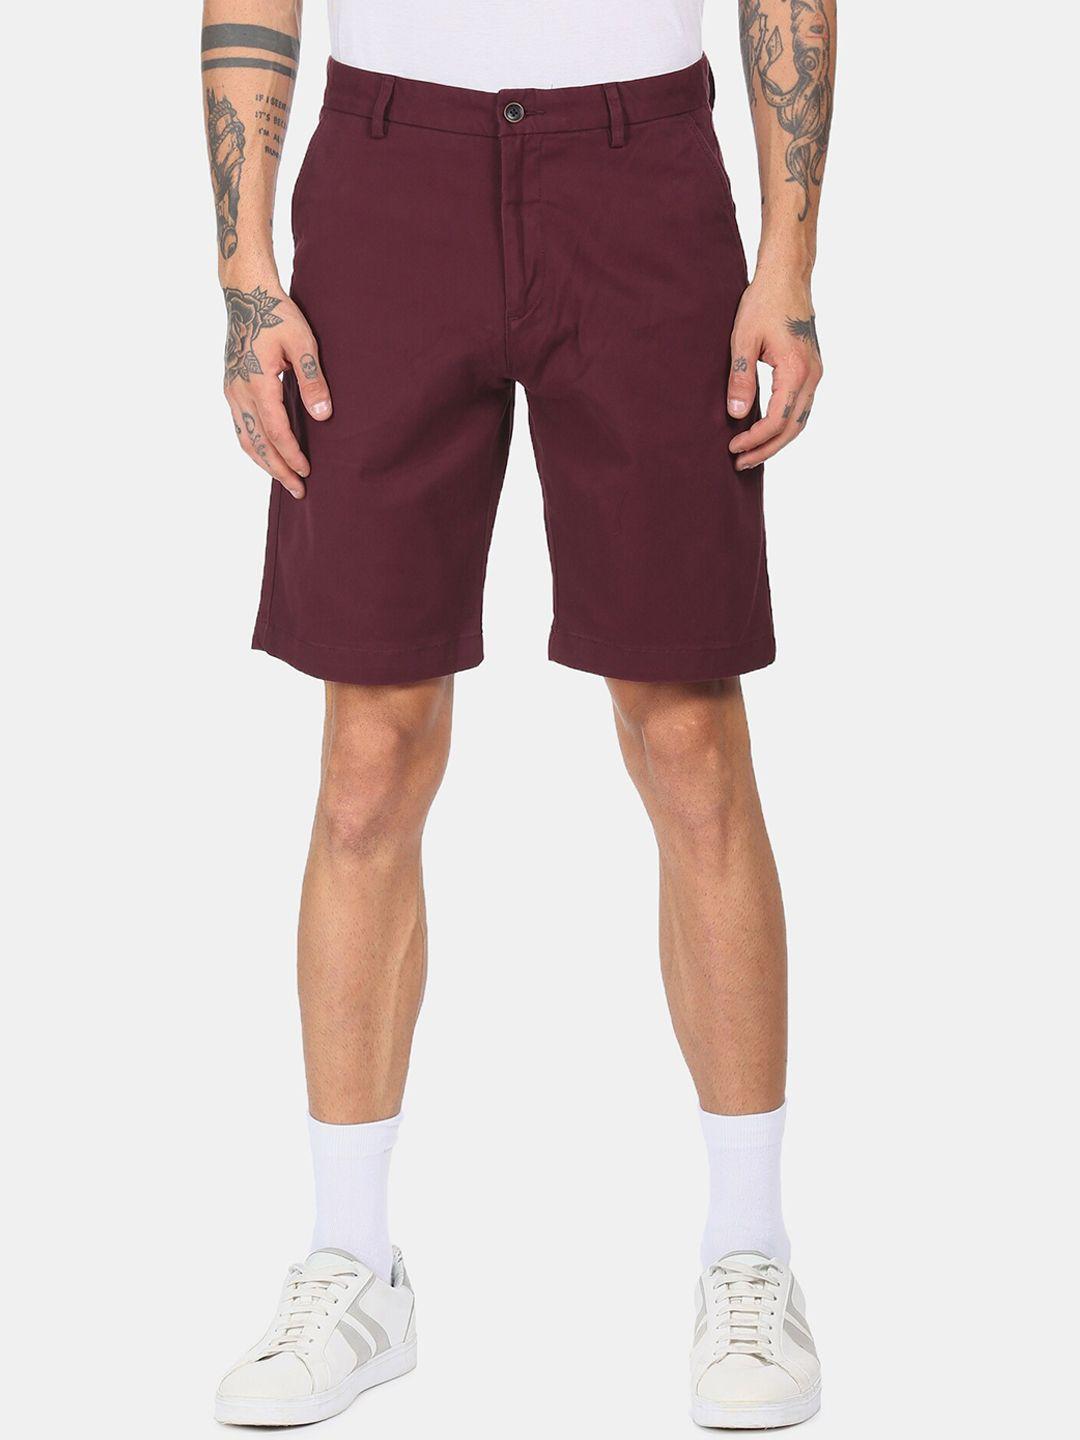 arrow-sport-men-purple-regular-shorts